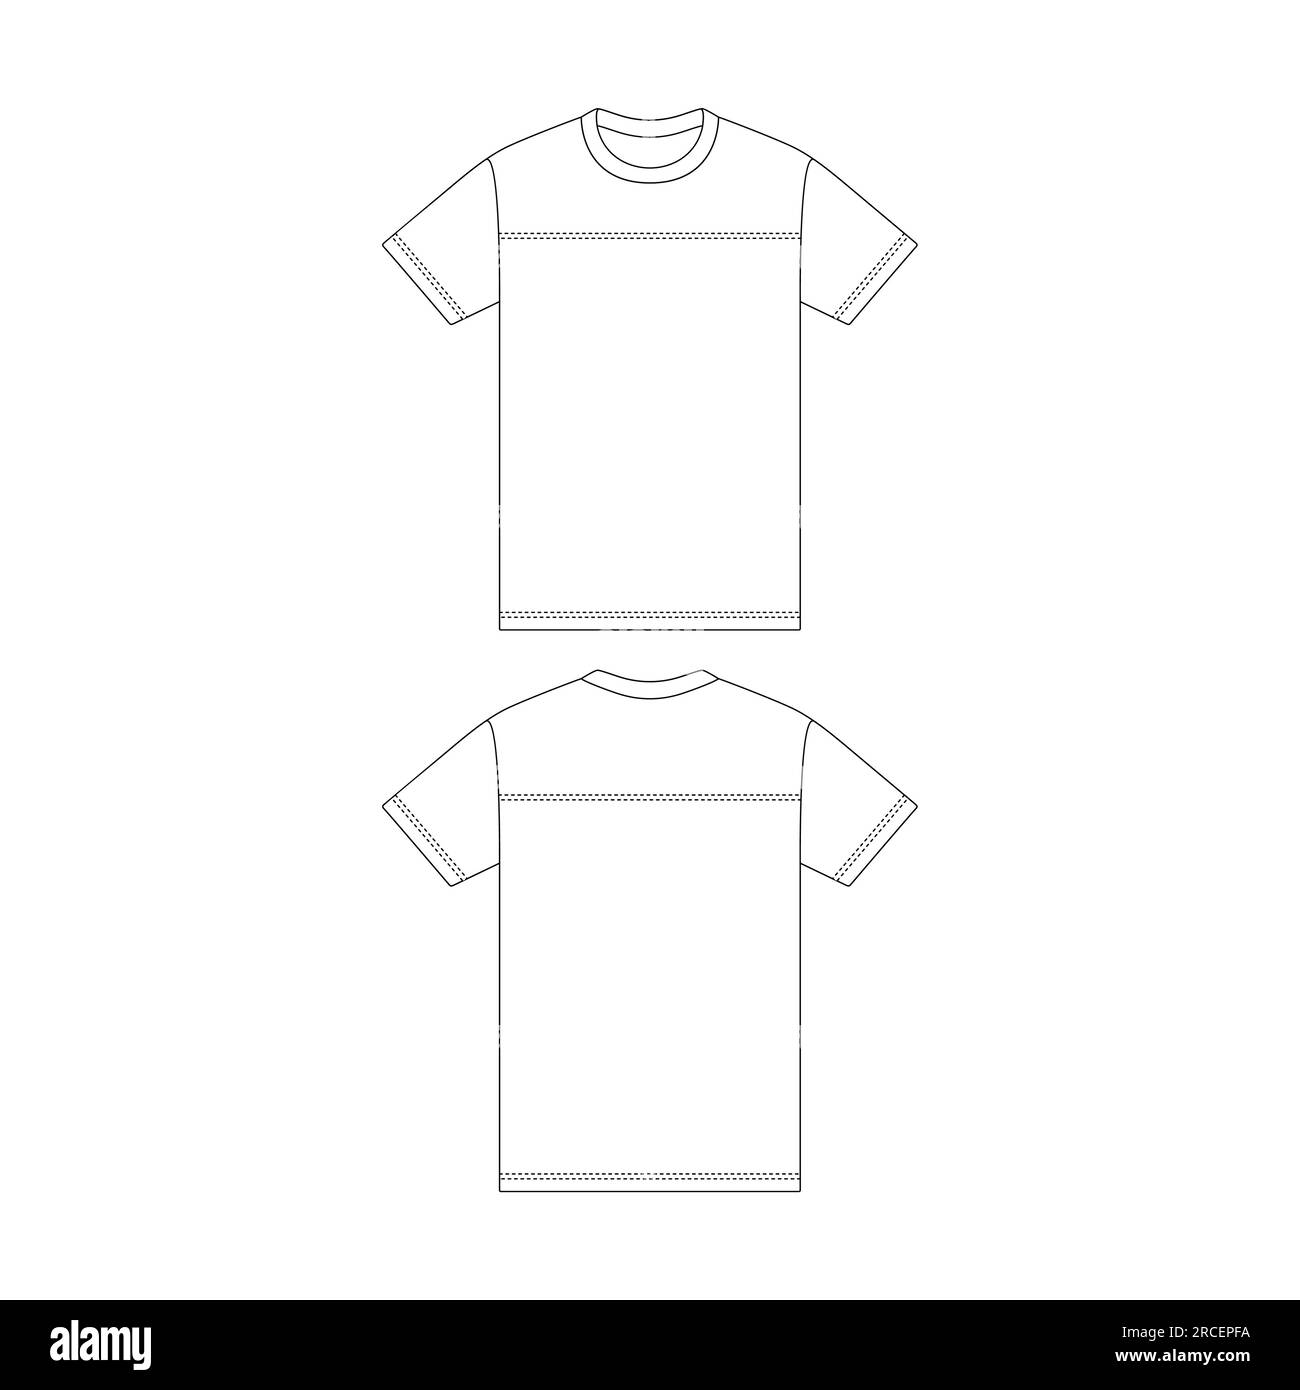 Template v- neck football jersey vector illustration flat sketch design ...